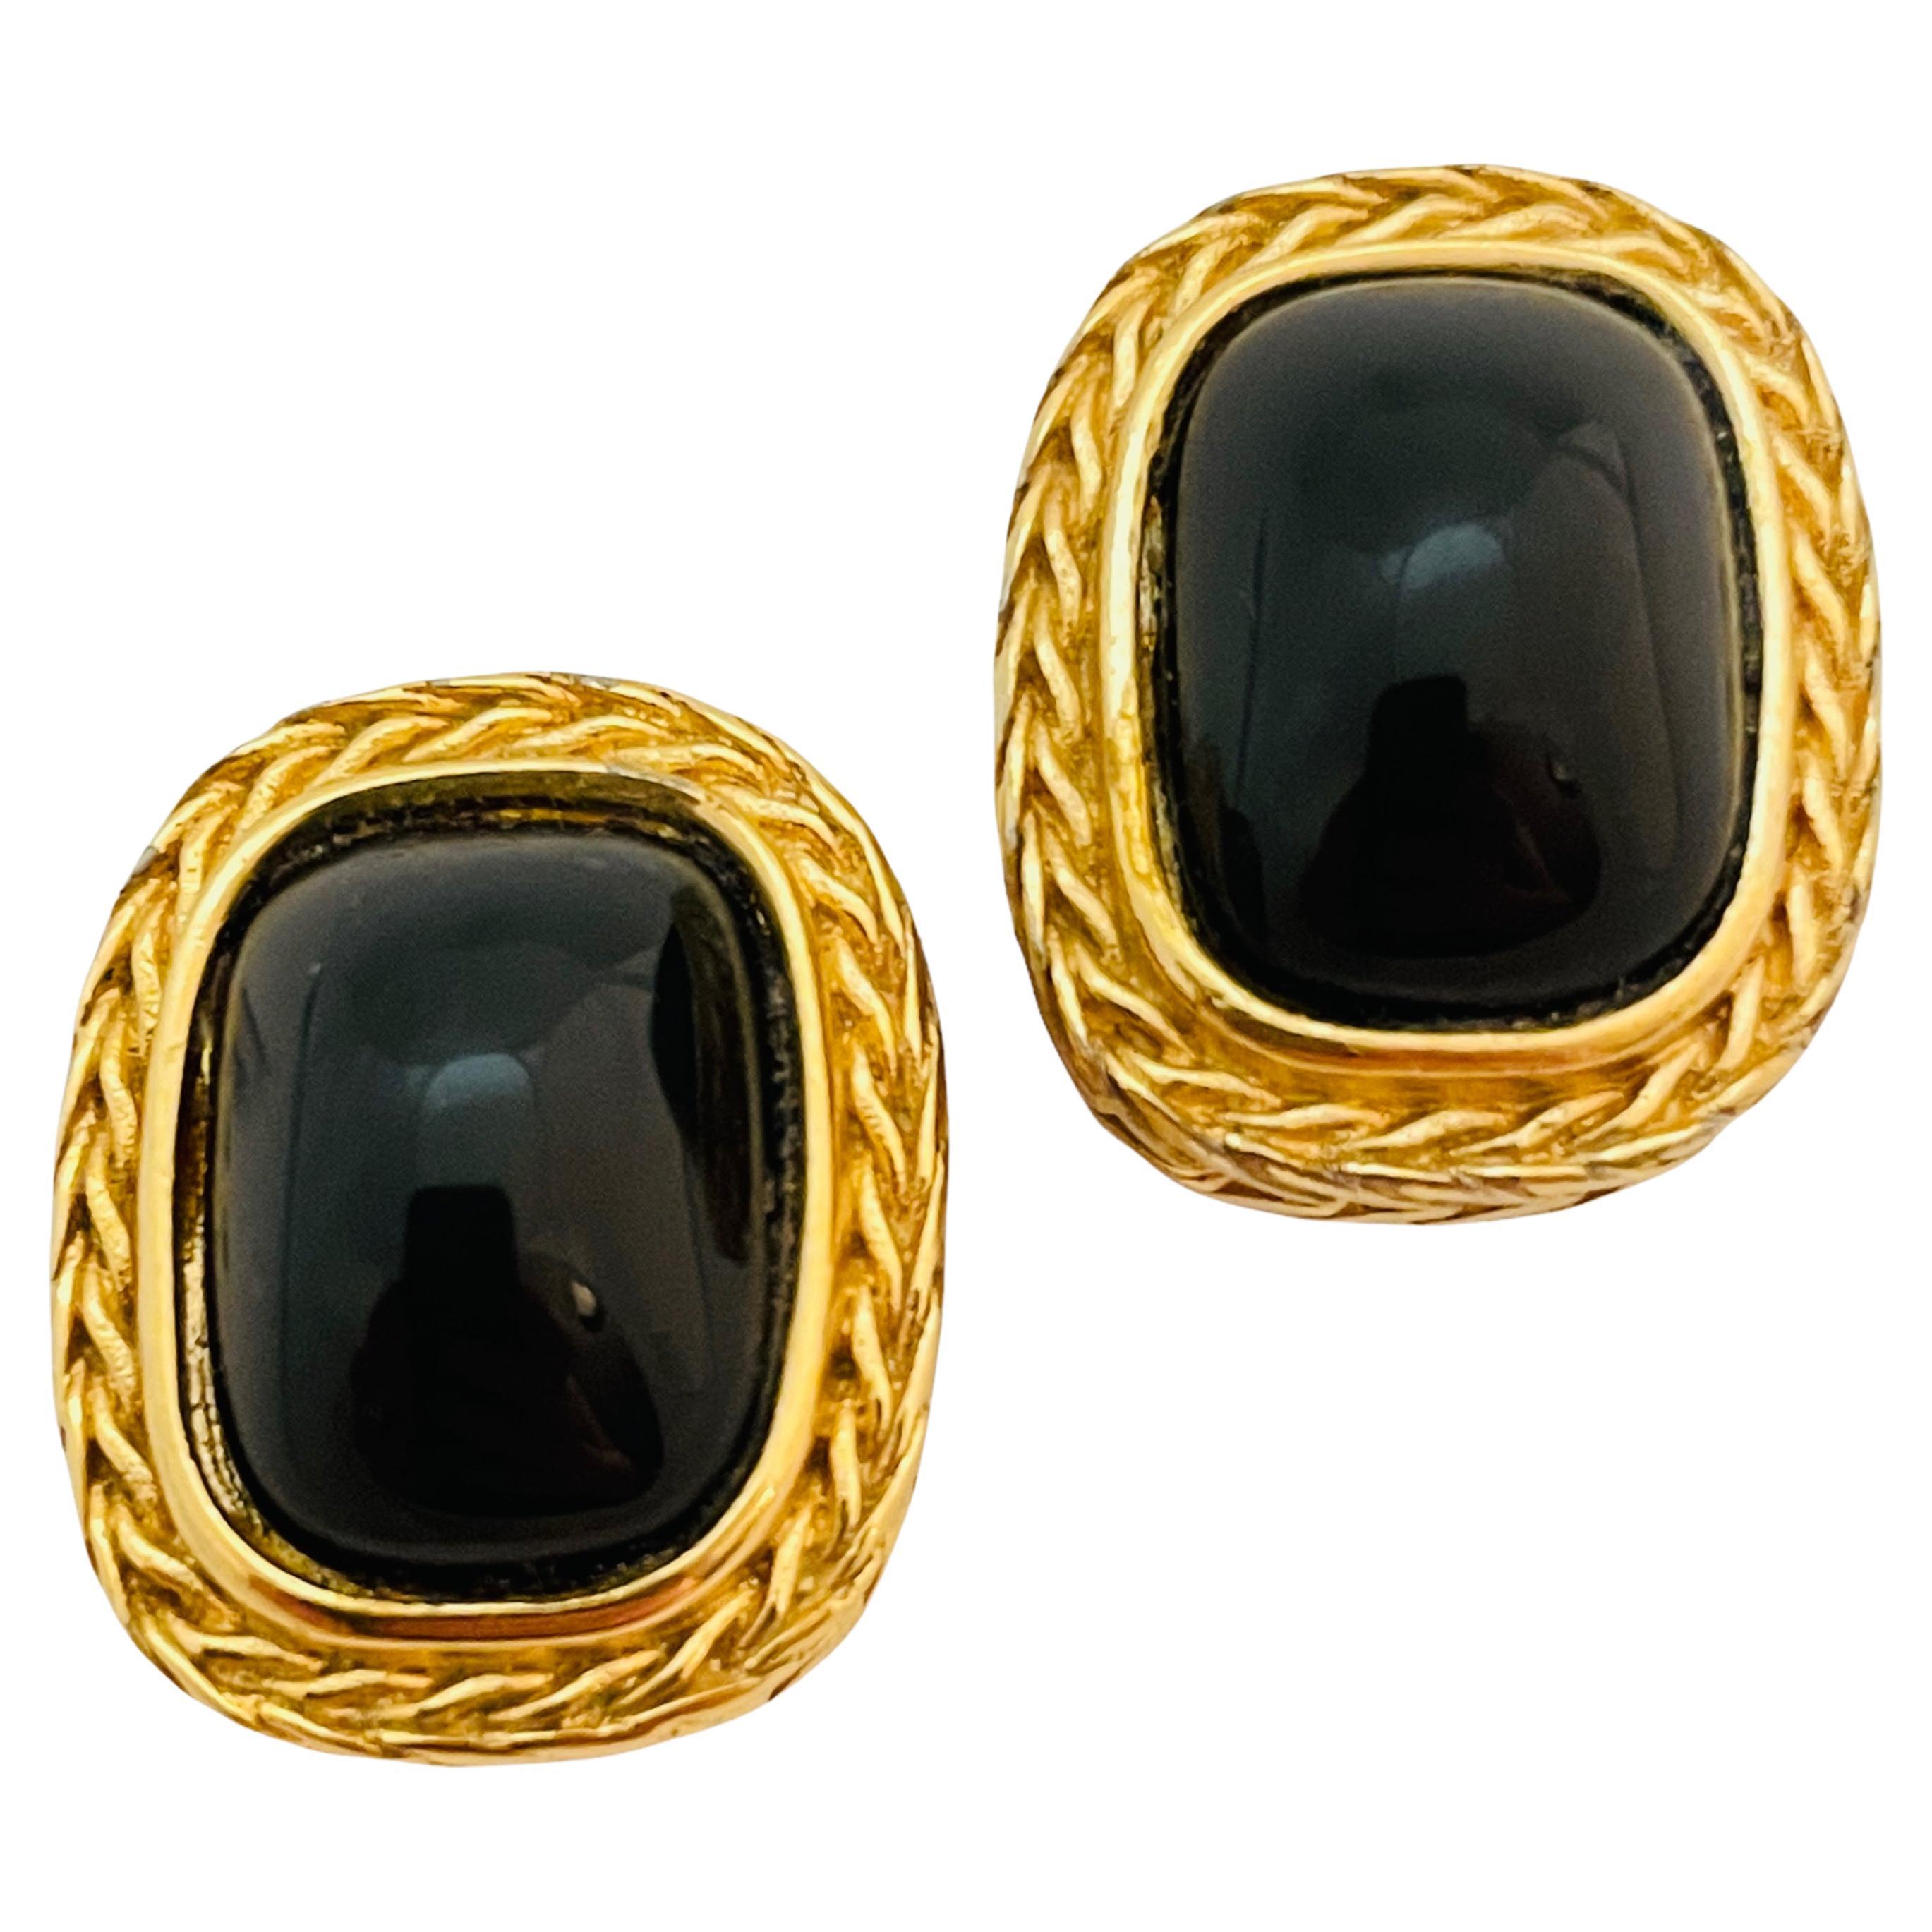 Vintage GIVENCHY Paris New York gold black designer runway clip on earrings